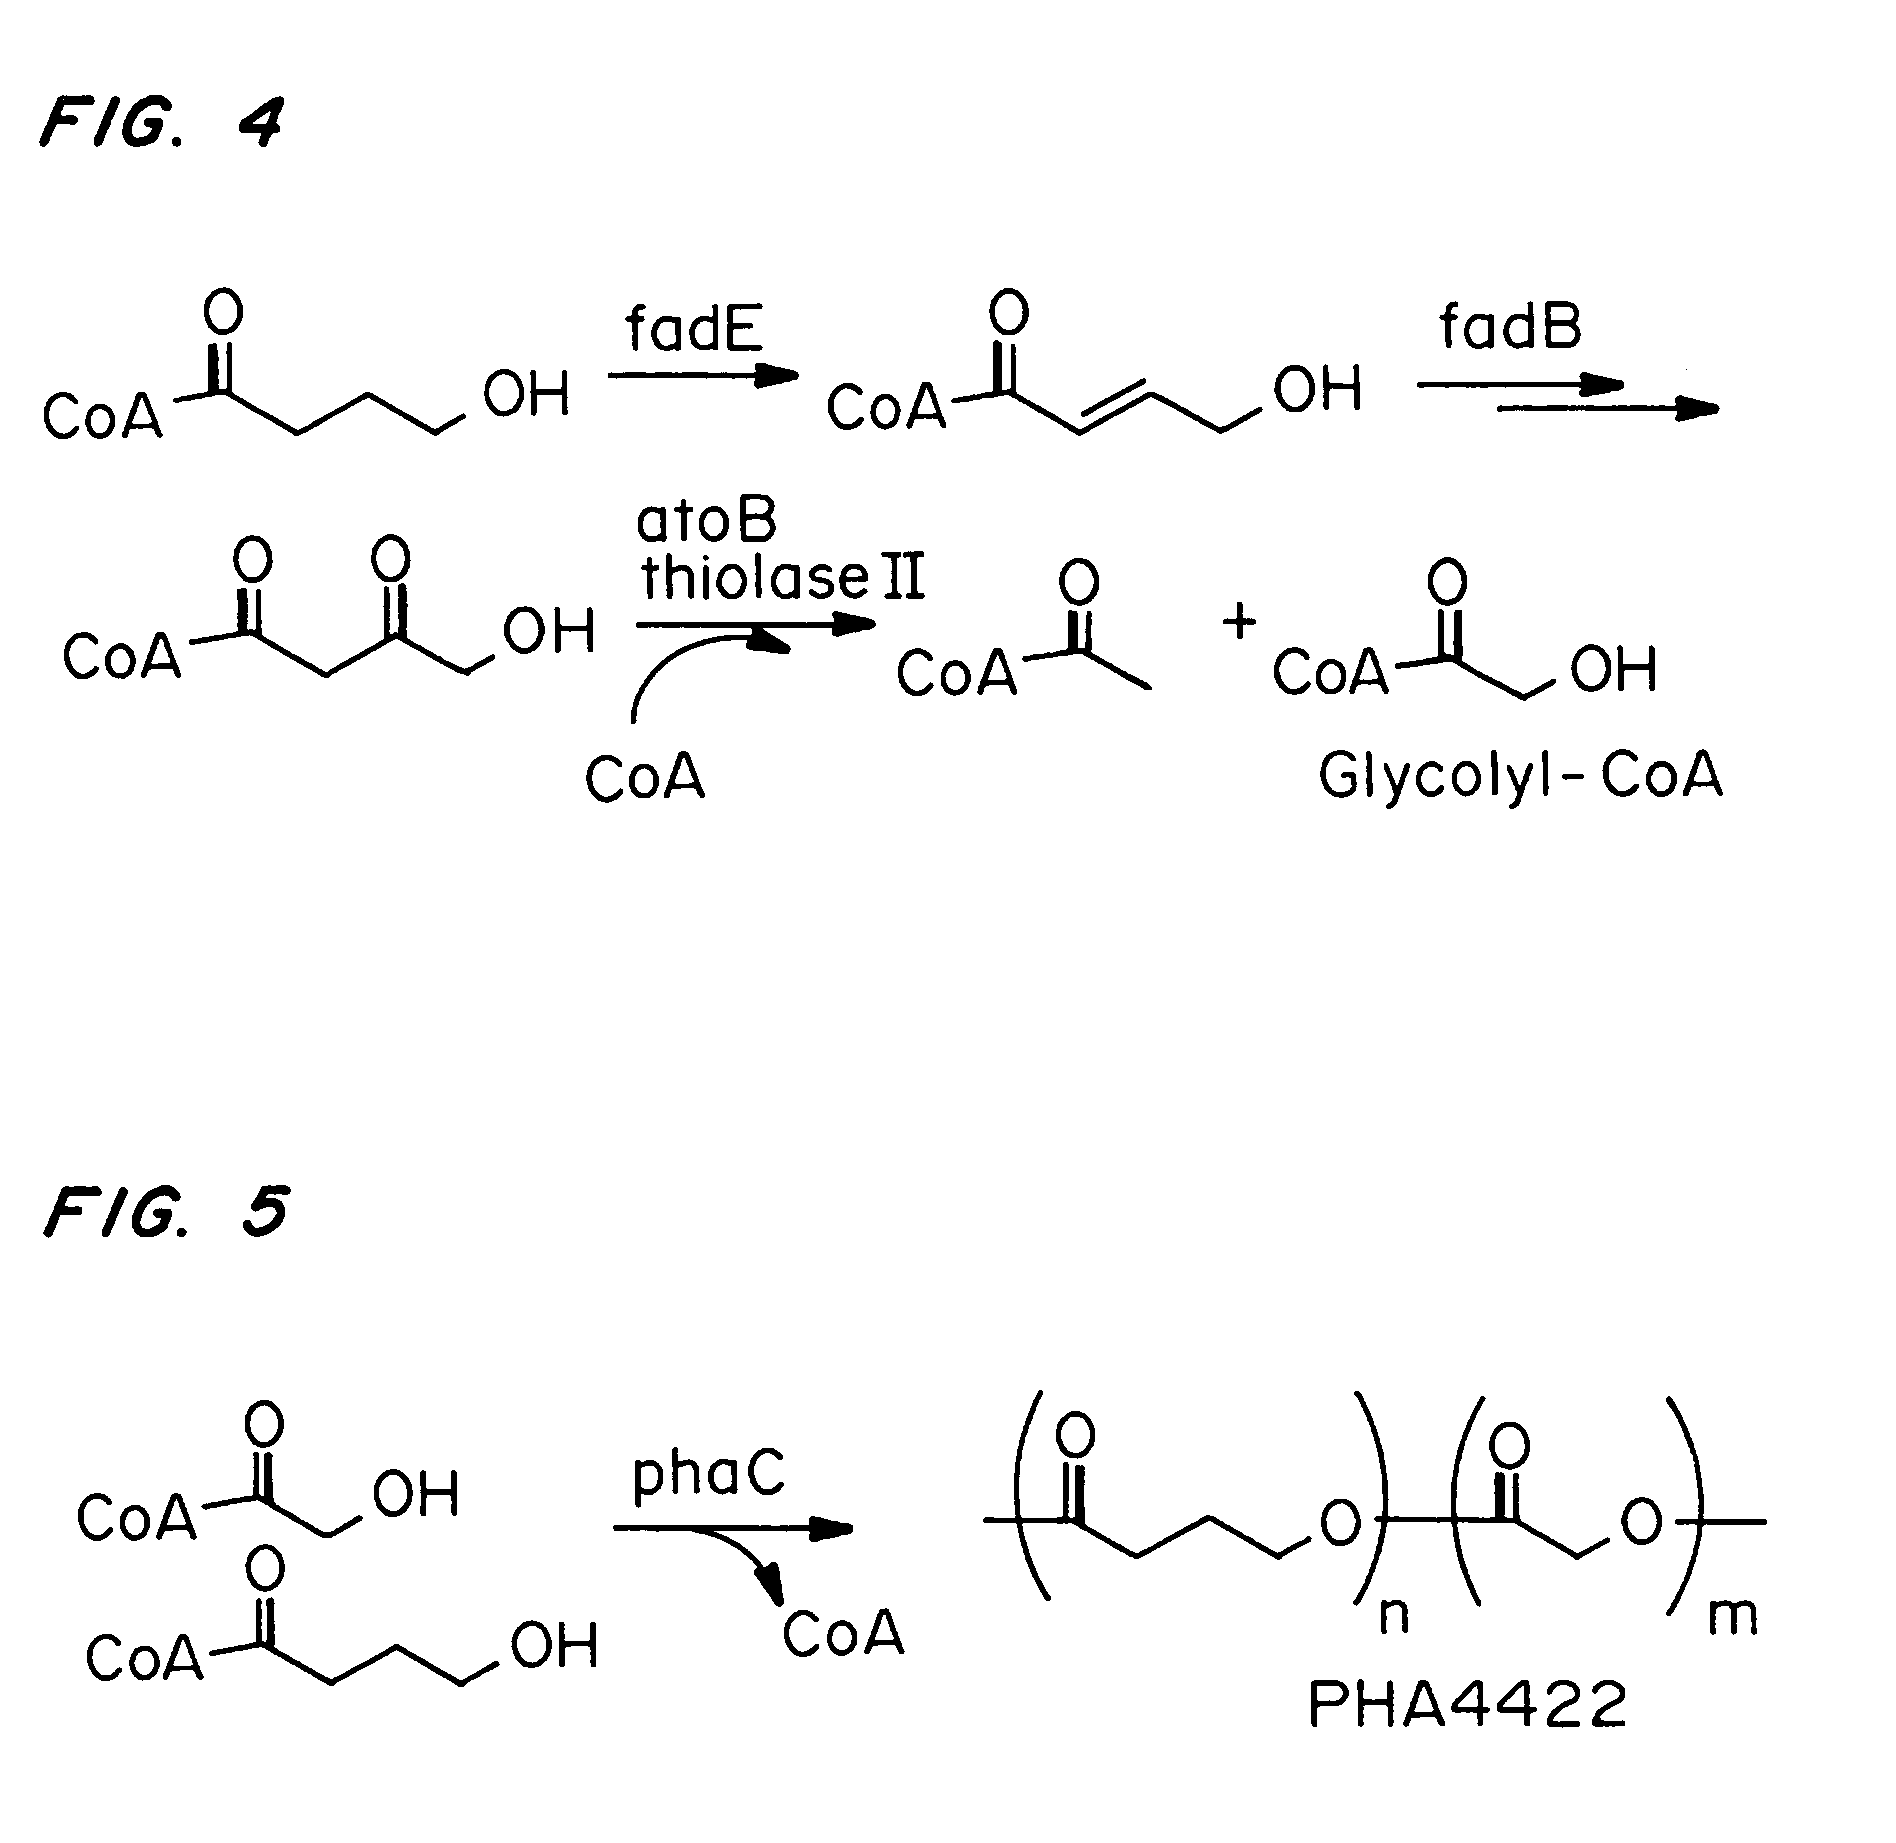 Bioabsorbable polymer containing 2-hydroxyacid monomers